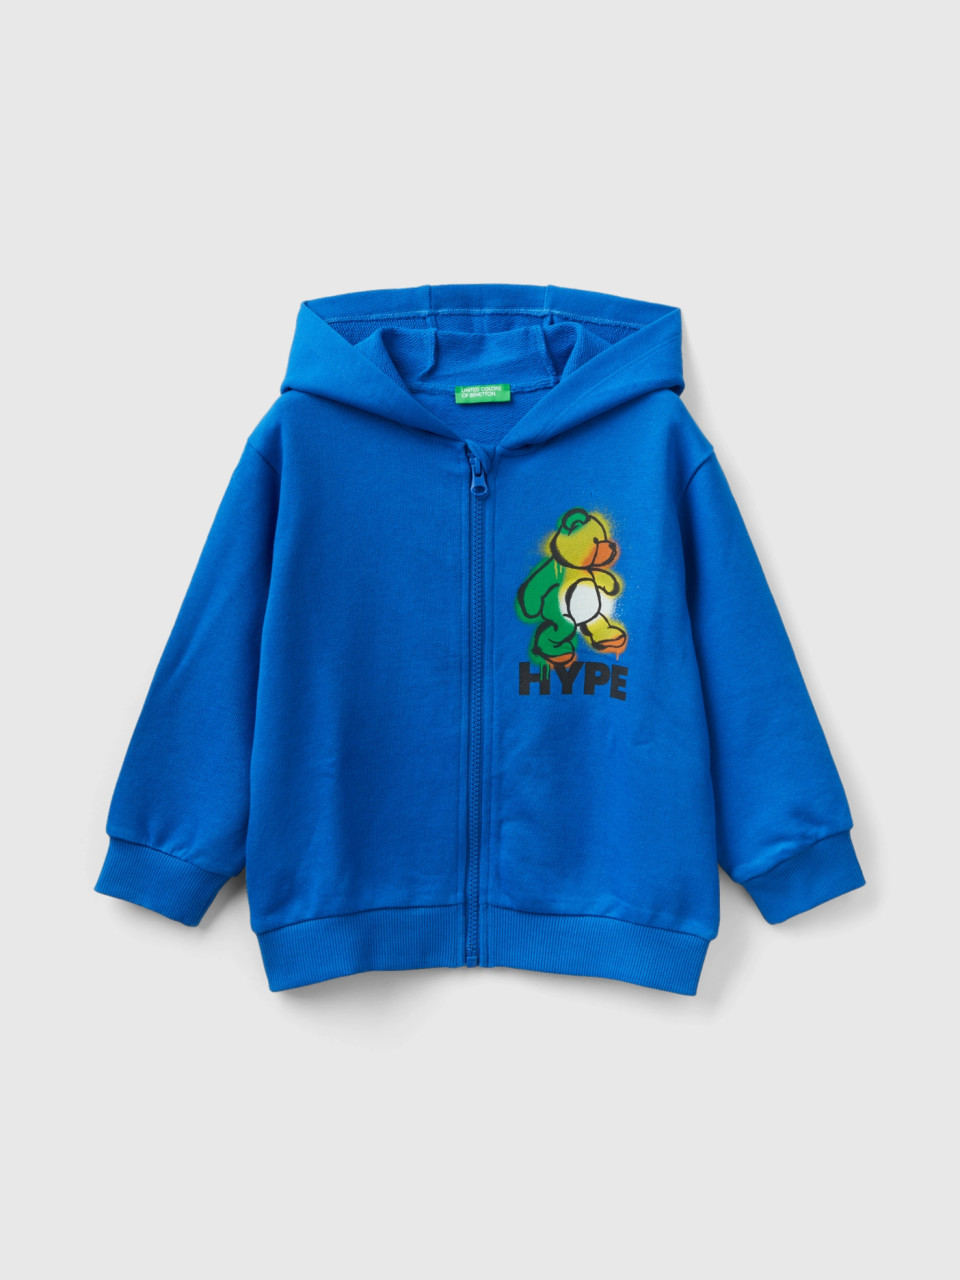 Benetton, Oversize Sweatshirt With Hood, Bright Blue, Kids